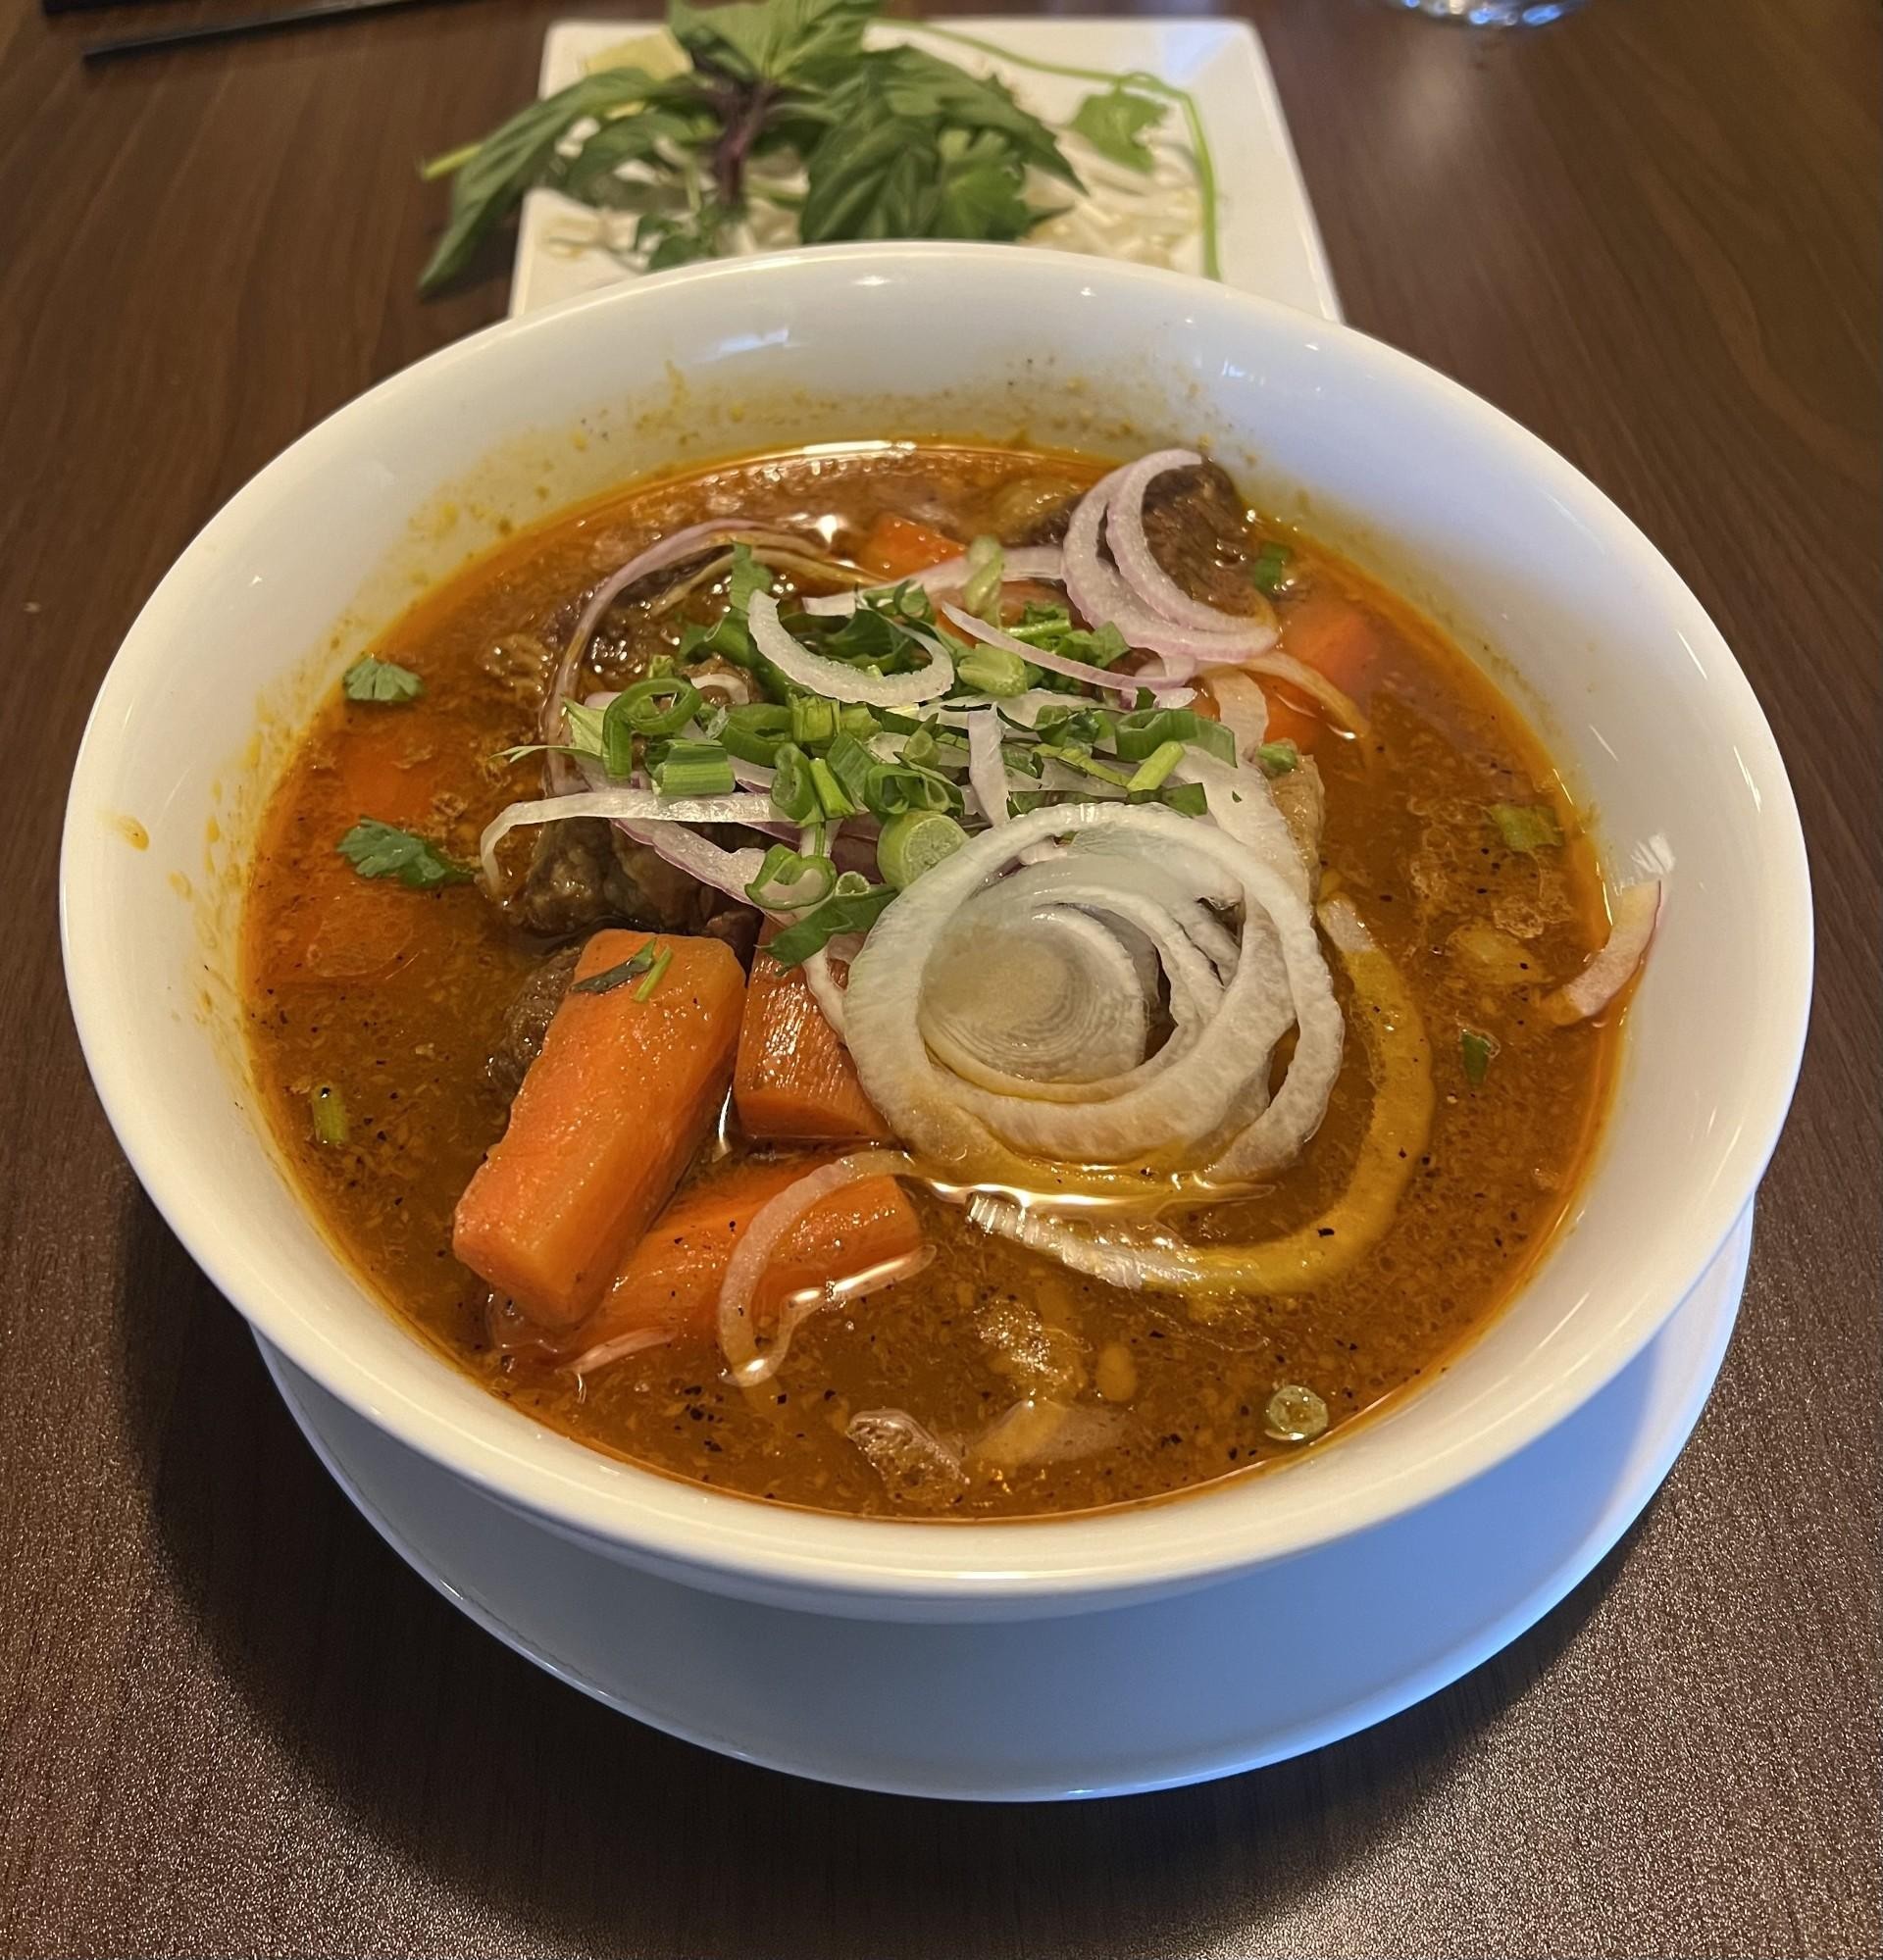 #21 Pho Bò Kho - Beef Stew